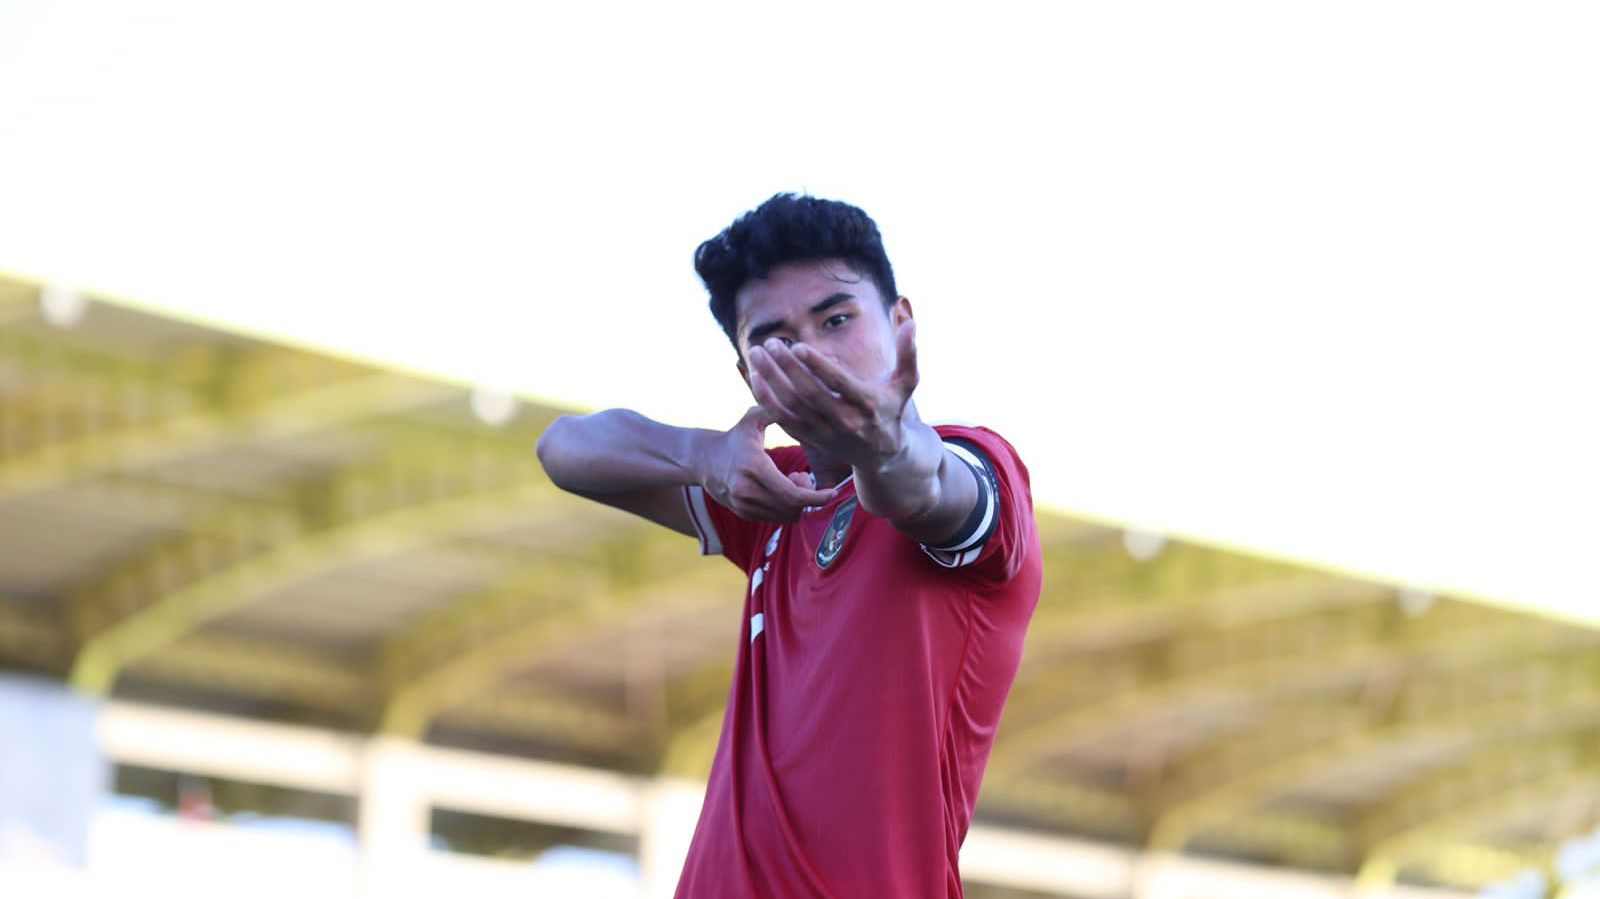 Kapten timnas U-20 Indonesia, Muhammad Ferarri, melakukan selebrasi seusai mencetak gol ke gawang Moldova U-20 pada laga uji coba yang berlangsung di Antalya, Turki, November 2022.